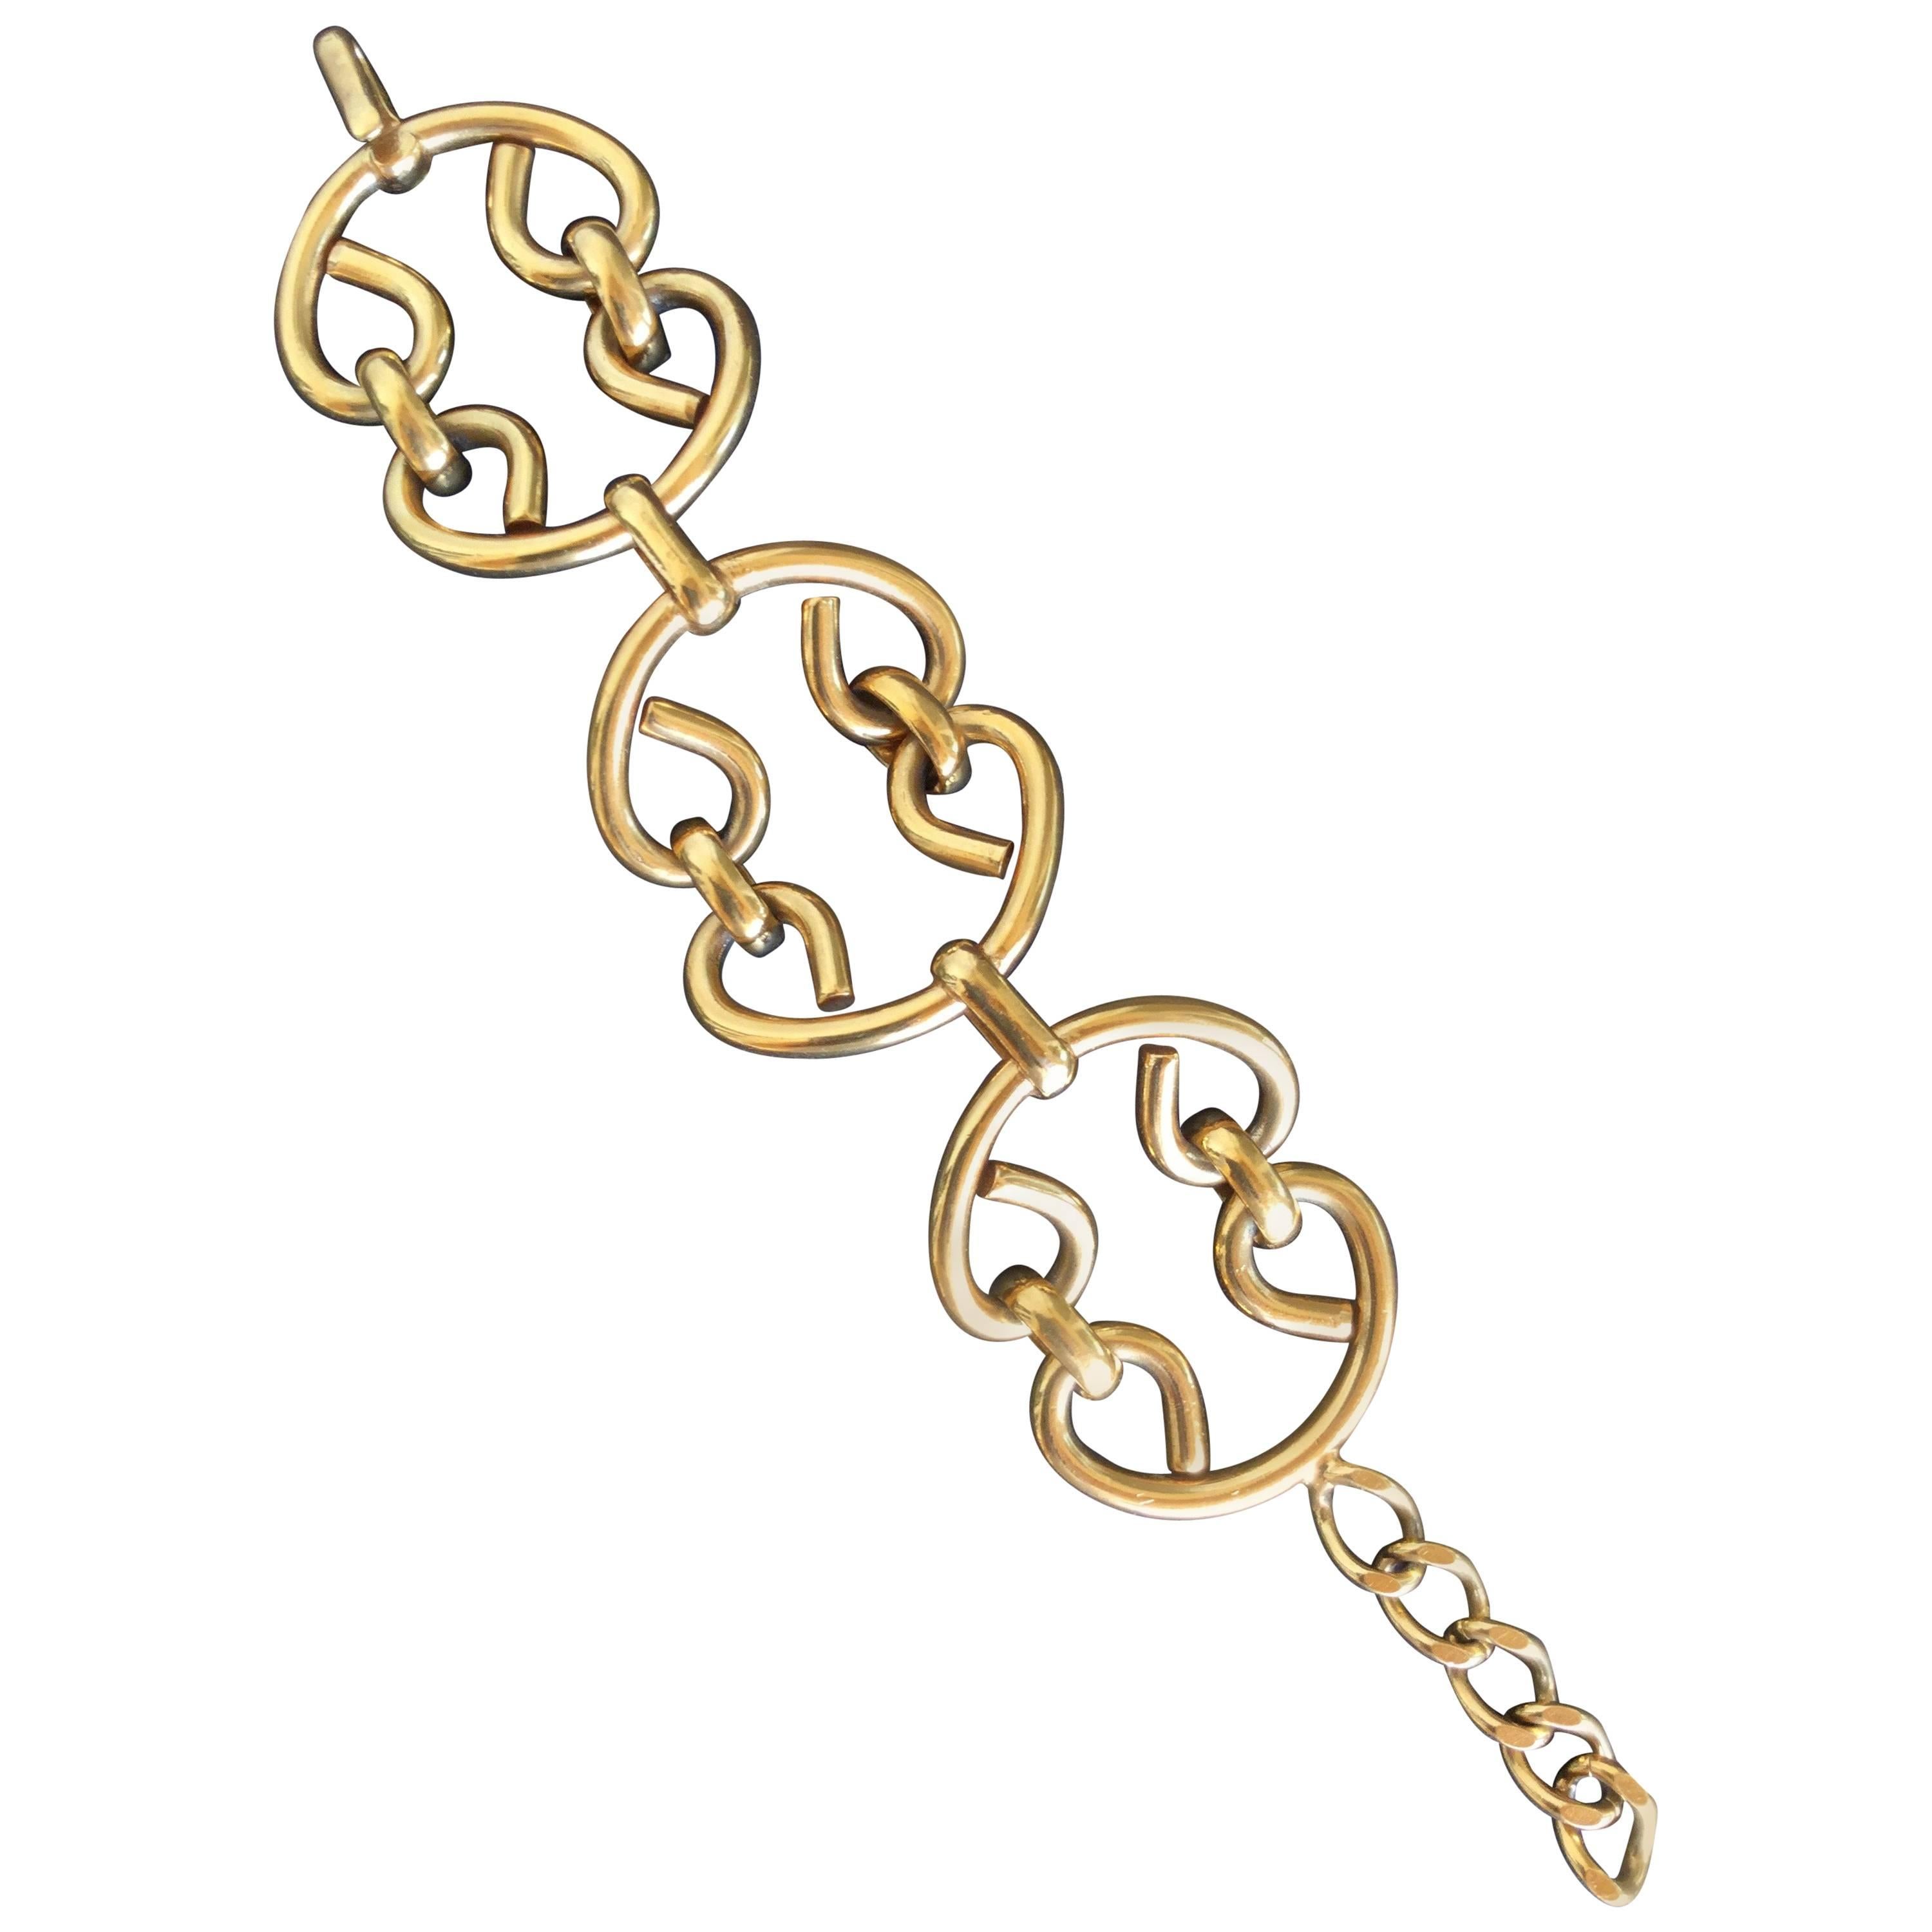 Chanel Chunky Gilt Link Bracelet. 1960's.